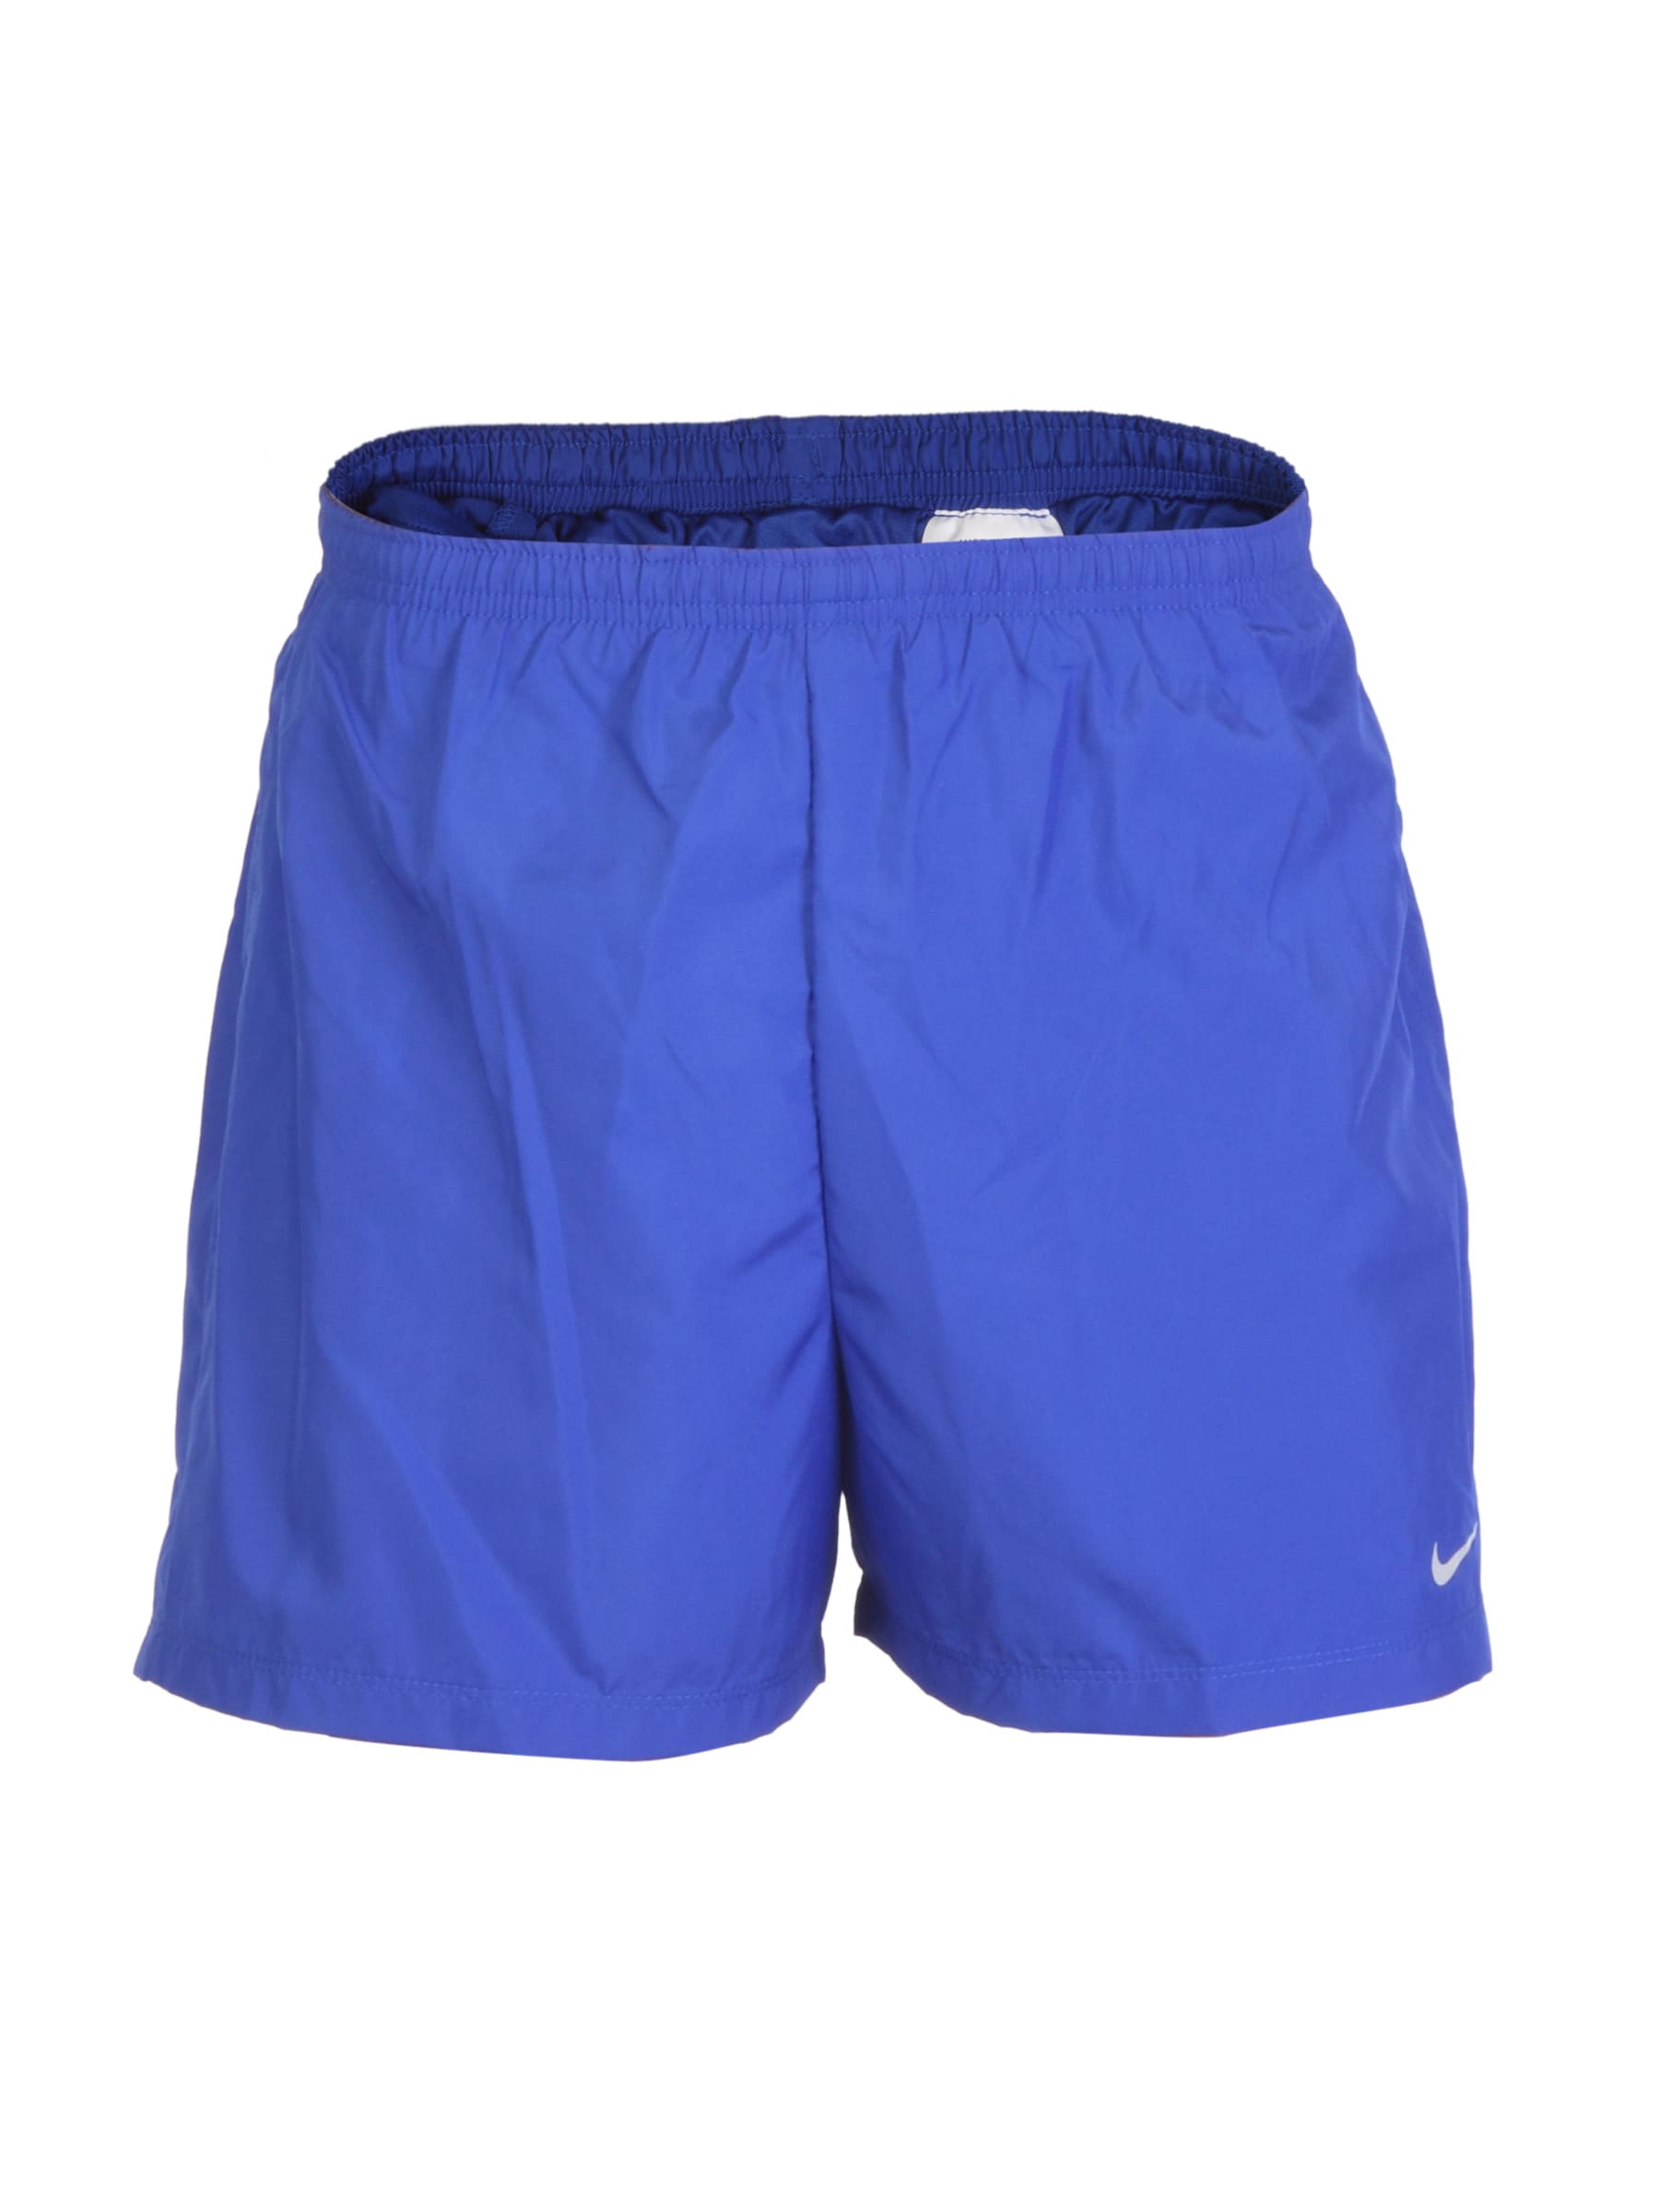 Nike Men Running Blue Shorts